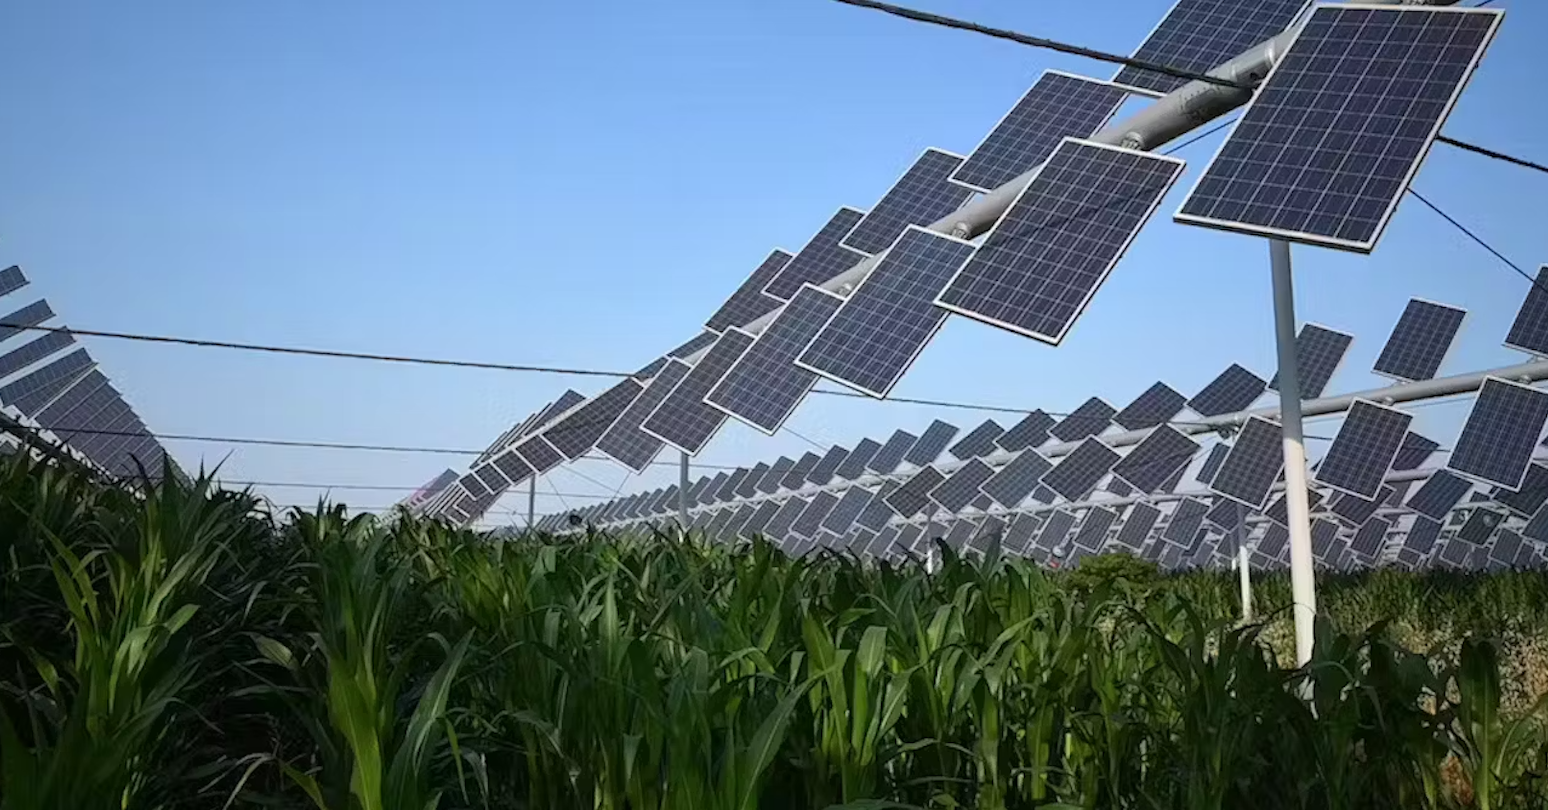 Solar panels overtop a farm field